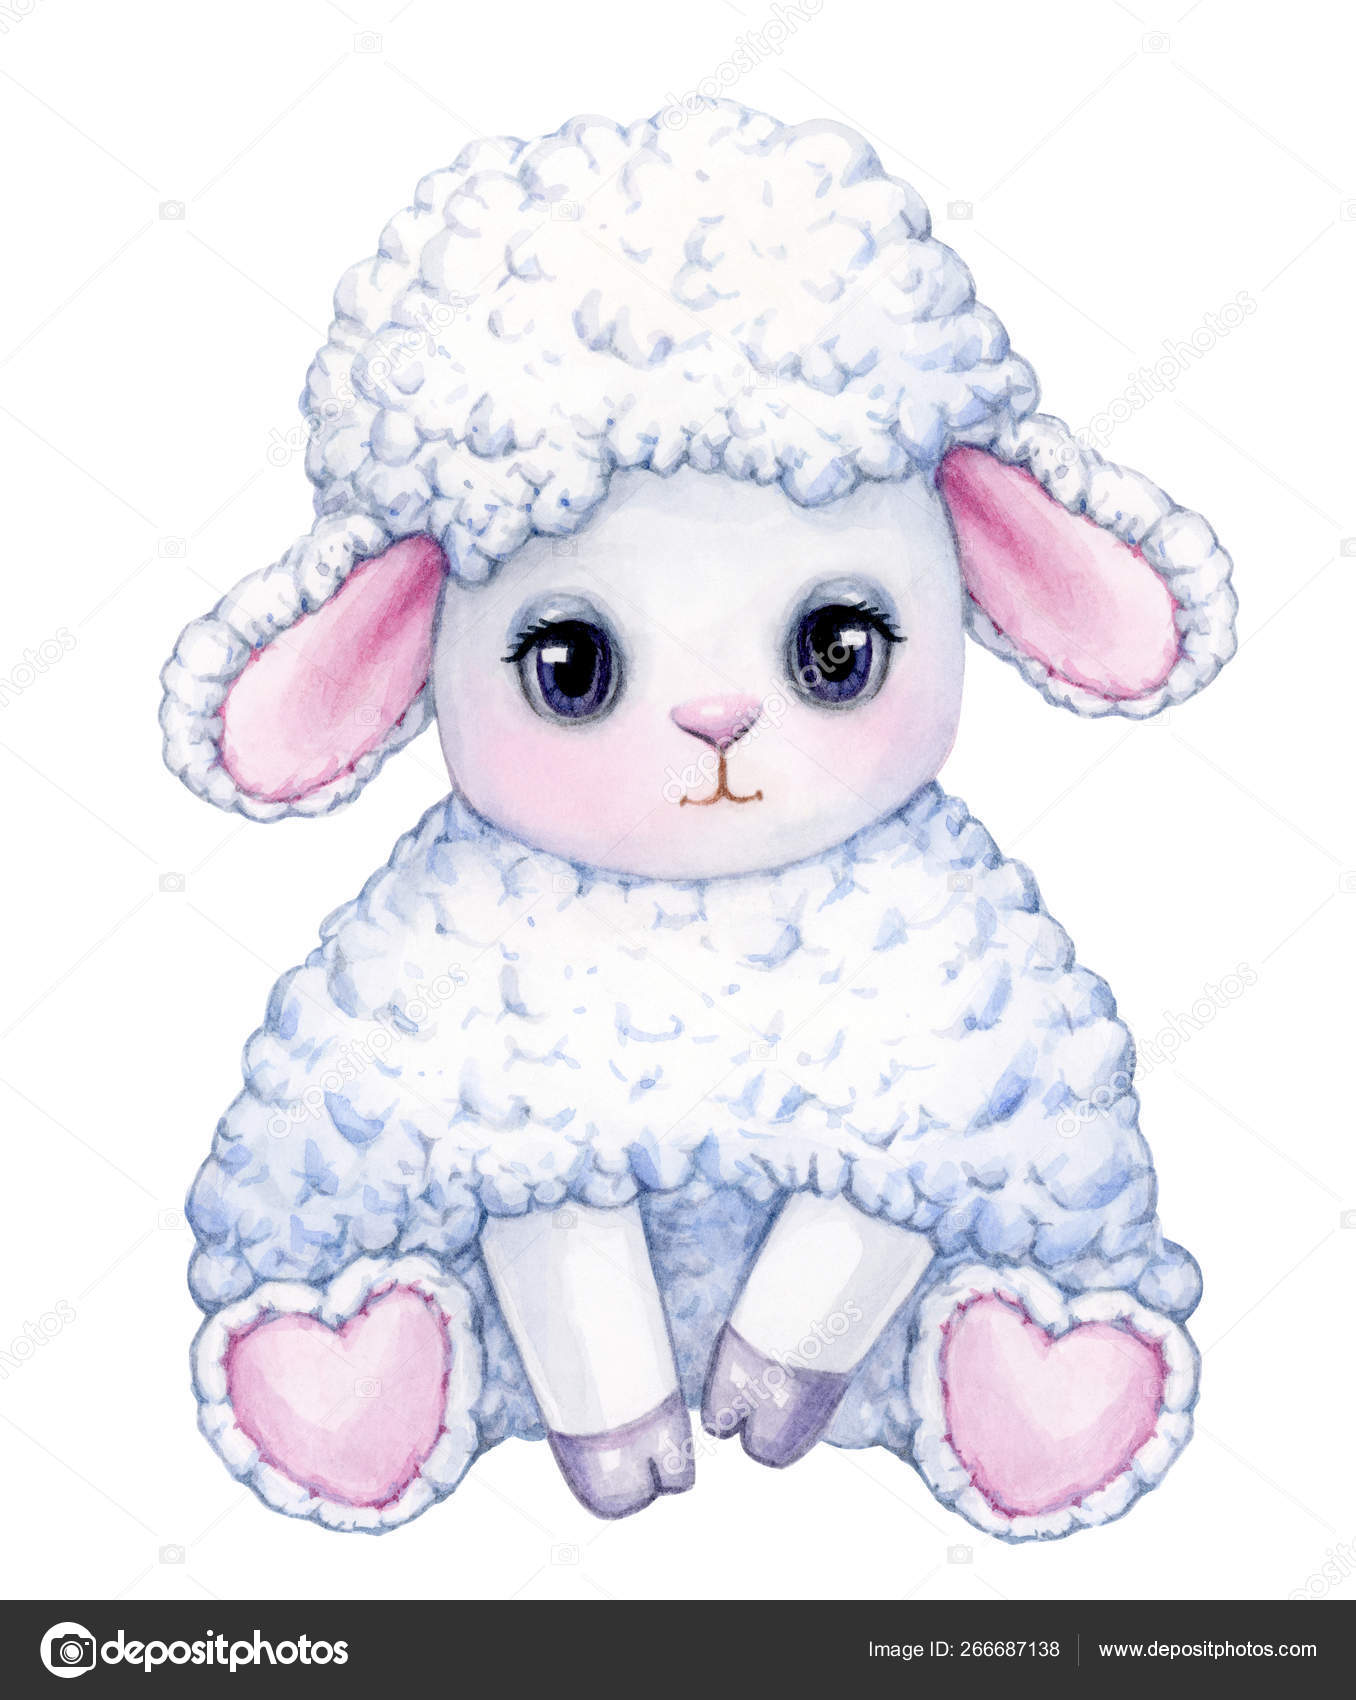 Cute, sitting, white sheep cartoon, isolated on white. Stock Photo by  ©rvika 266687138